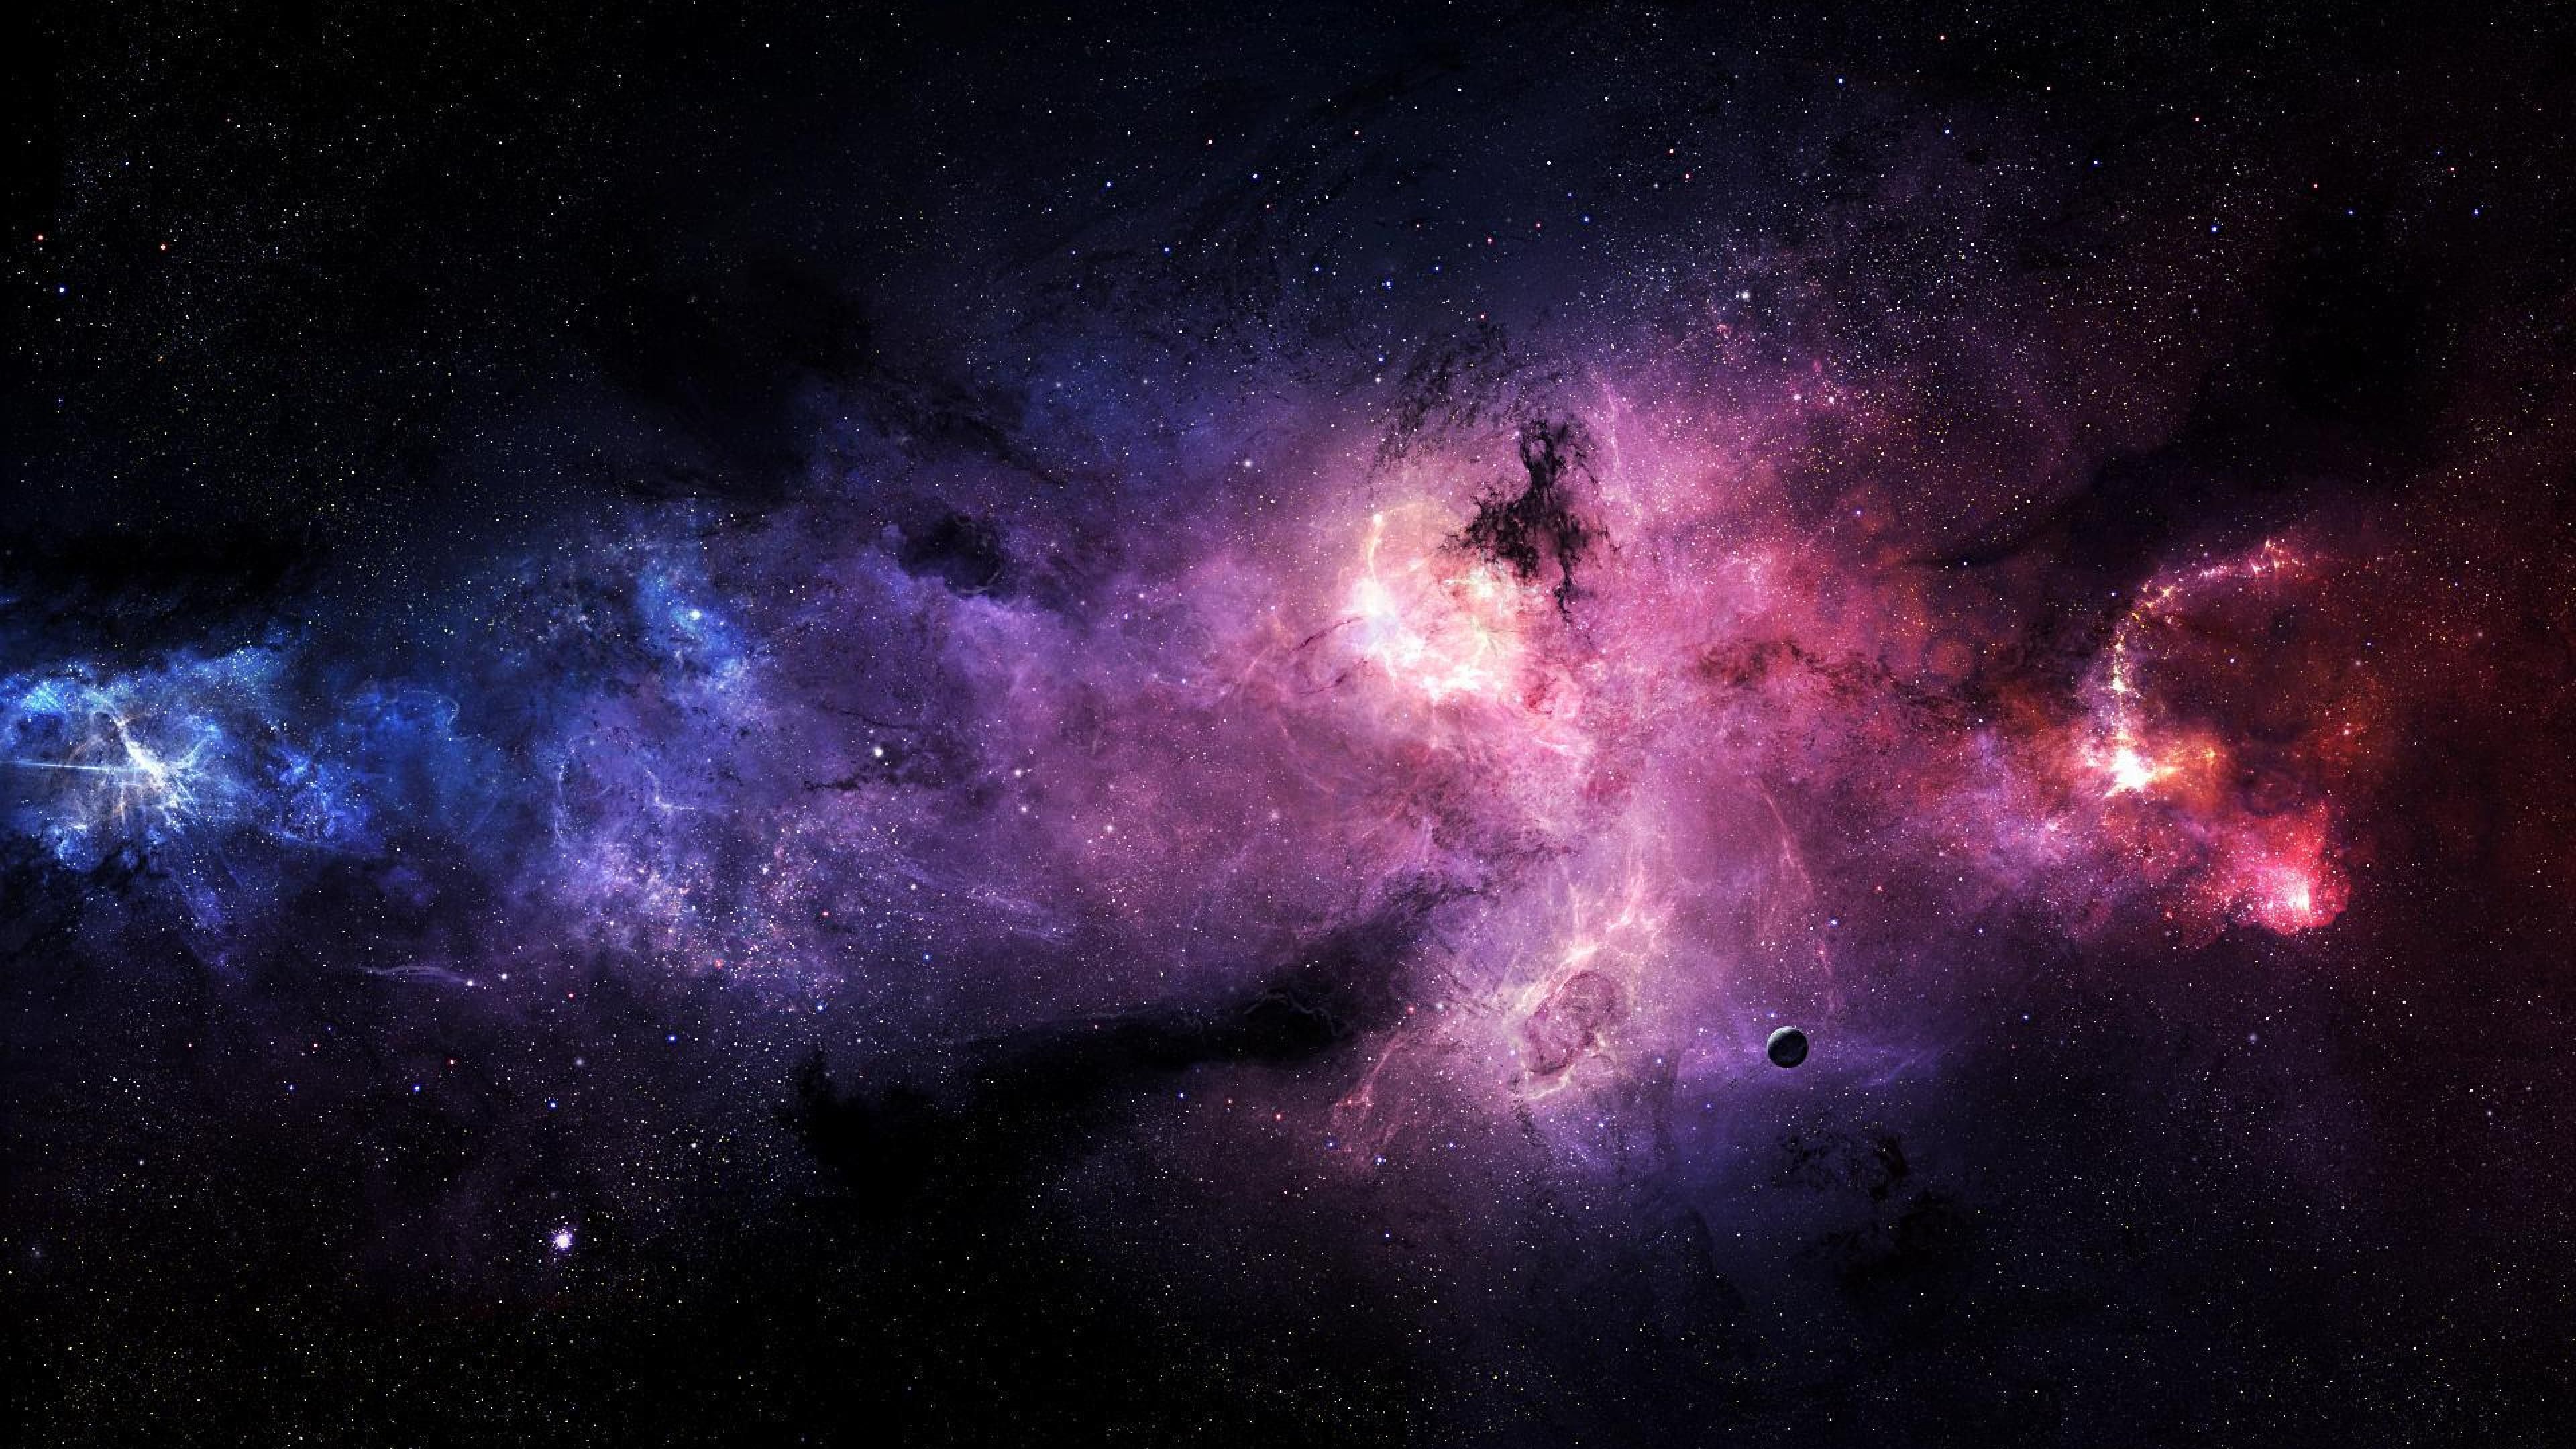 HD Wallpaper For Mac Nebula Galaxy